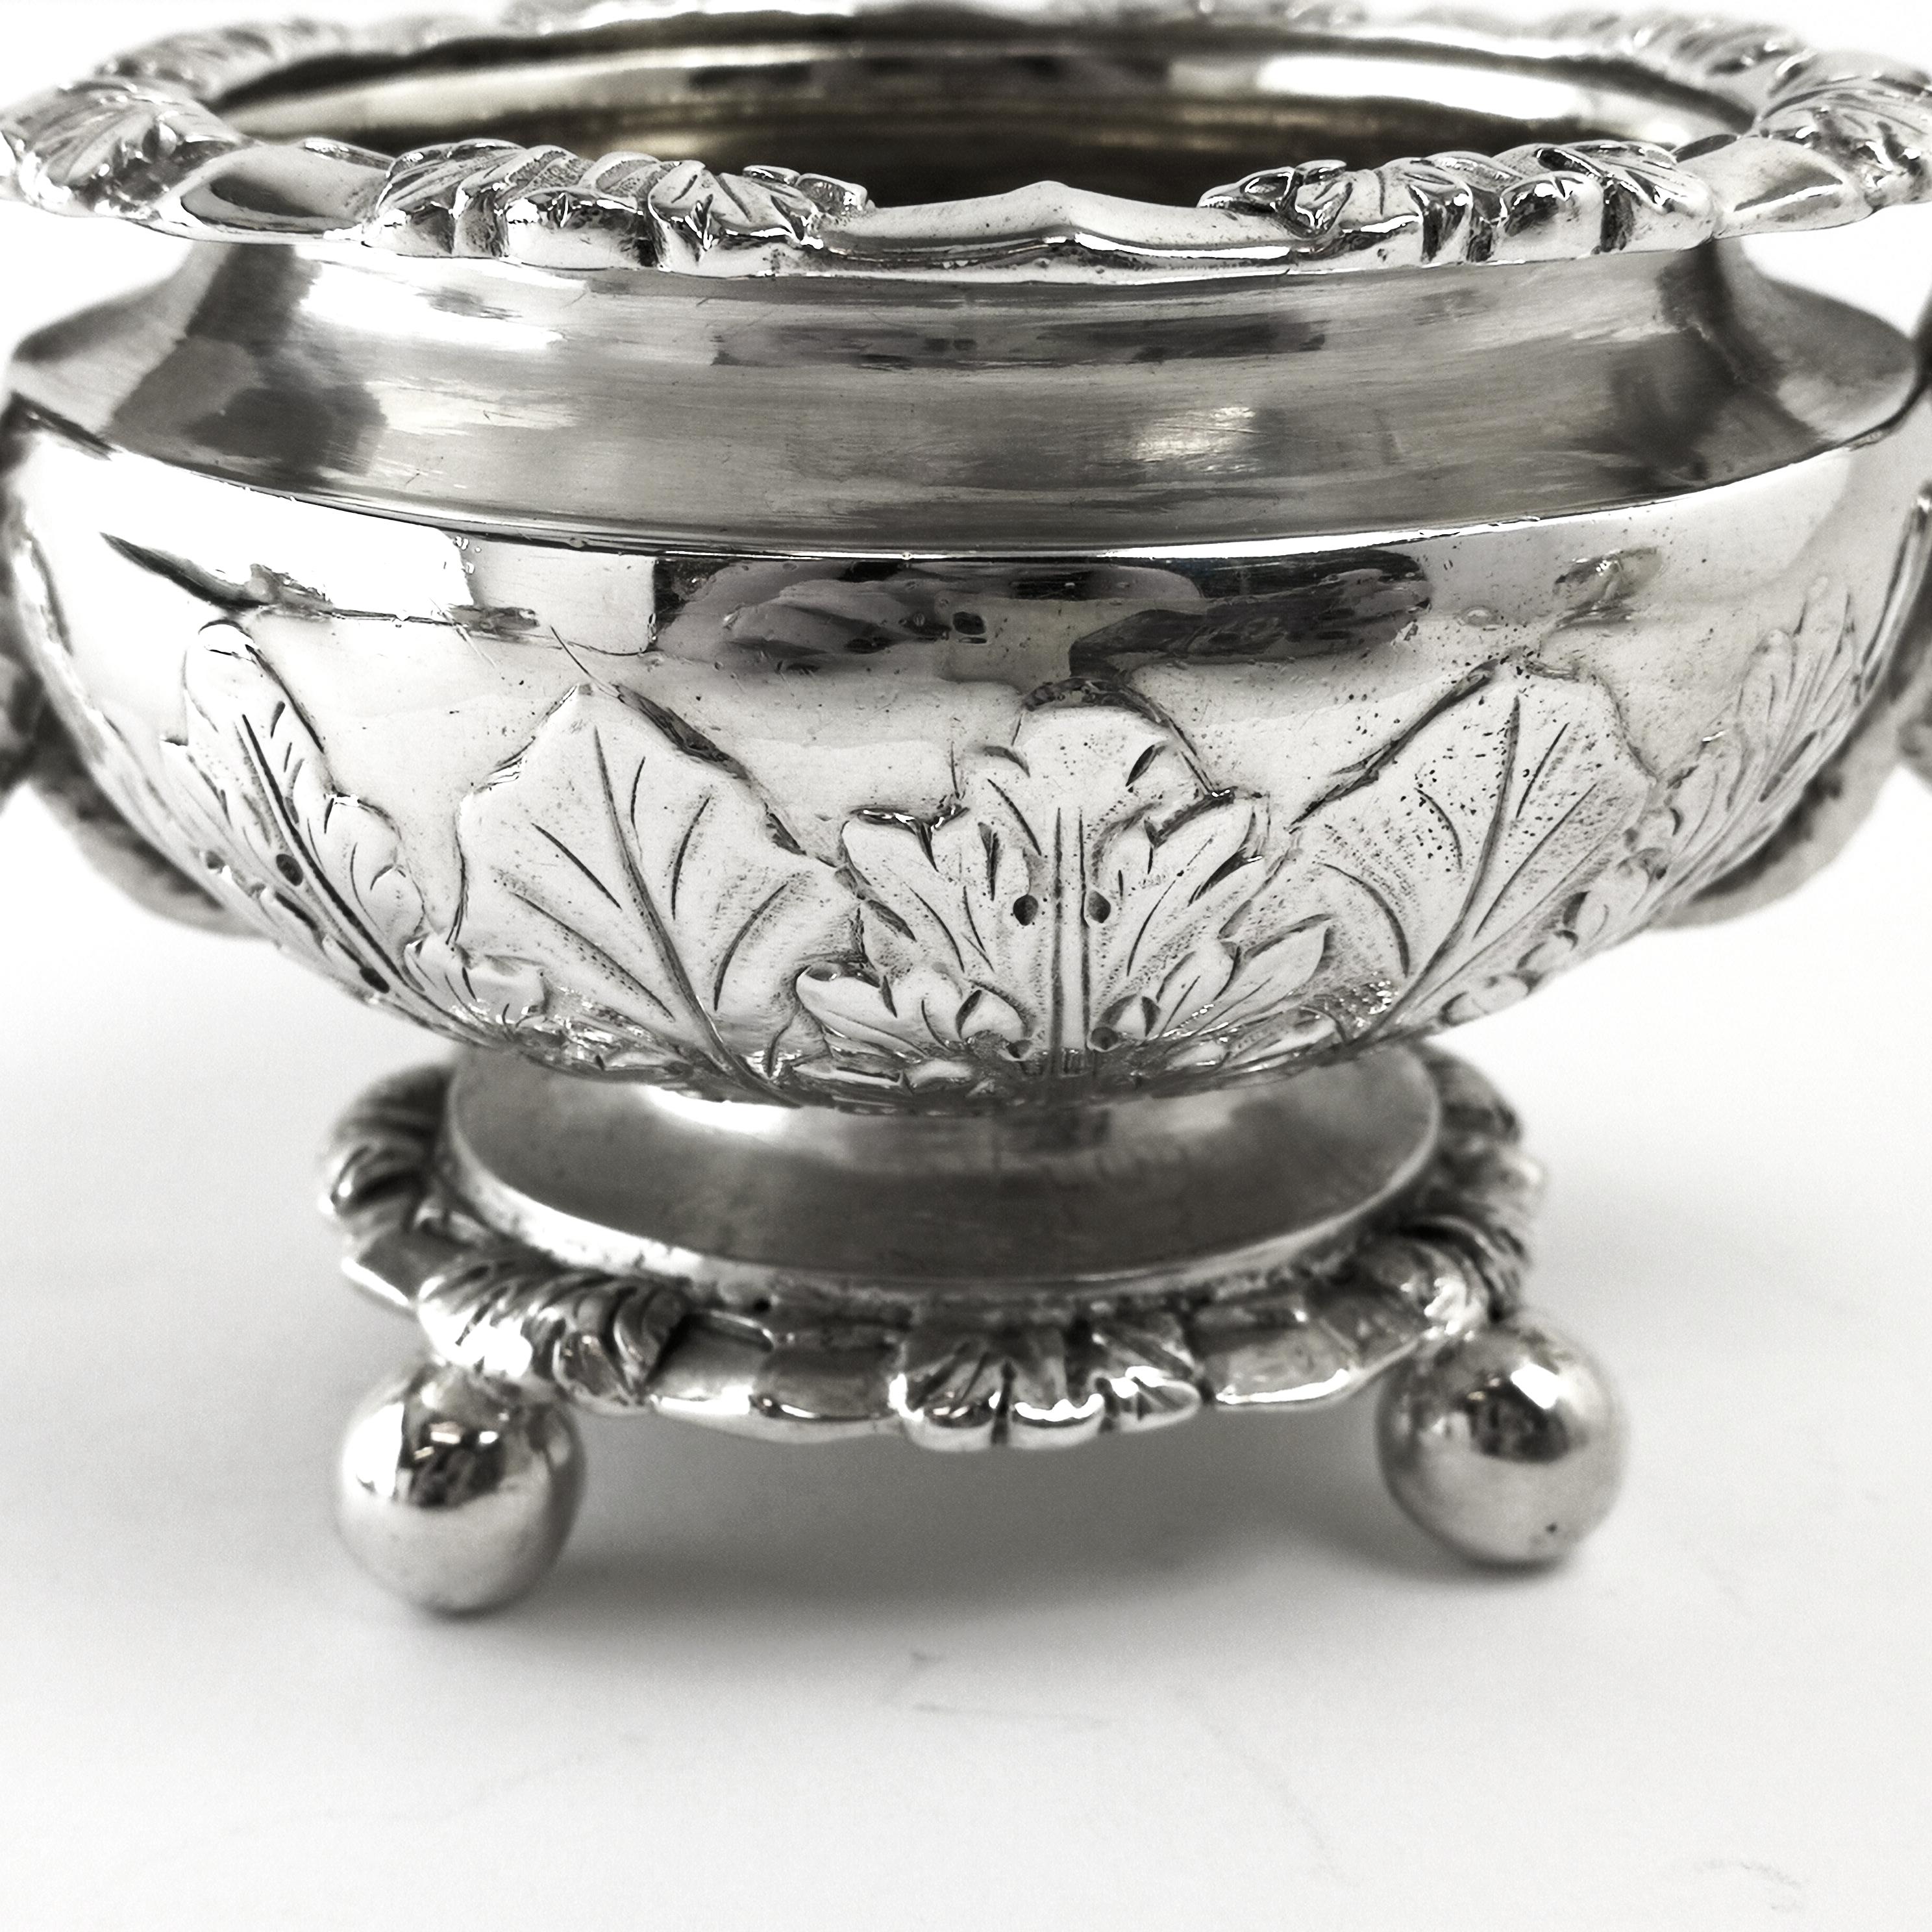 Set 4 Antique Sterling Silver Salts & Spoons / Salt Pinch Pots 1808/9 George III 4